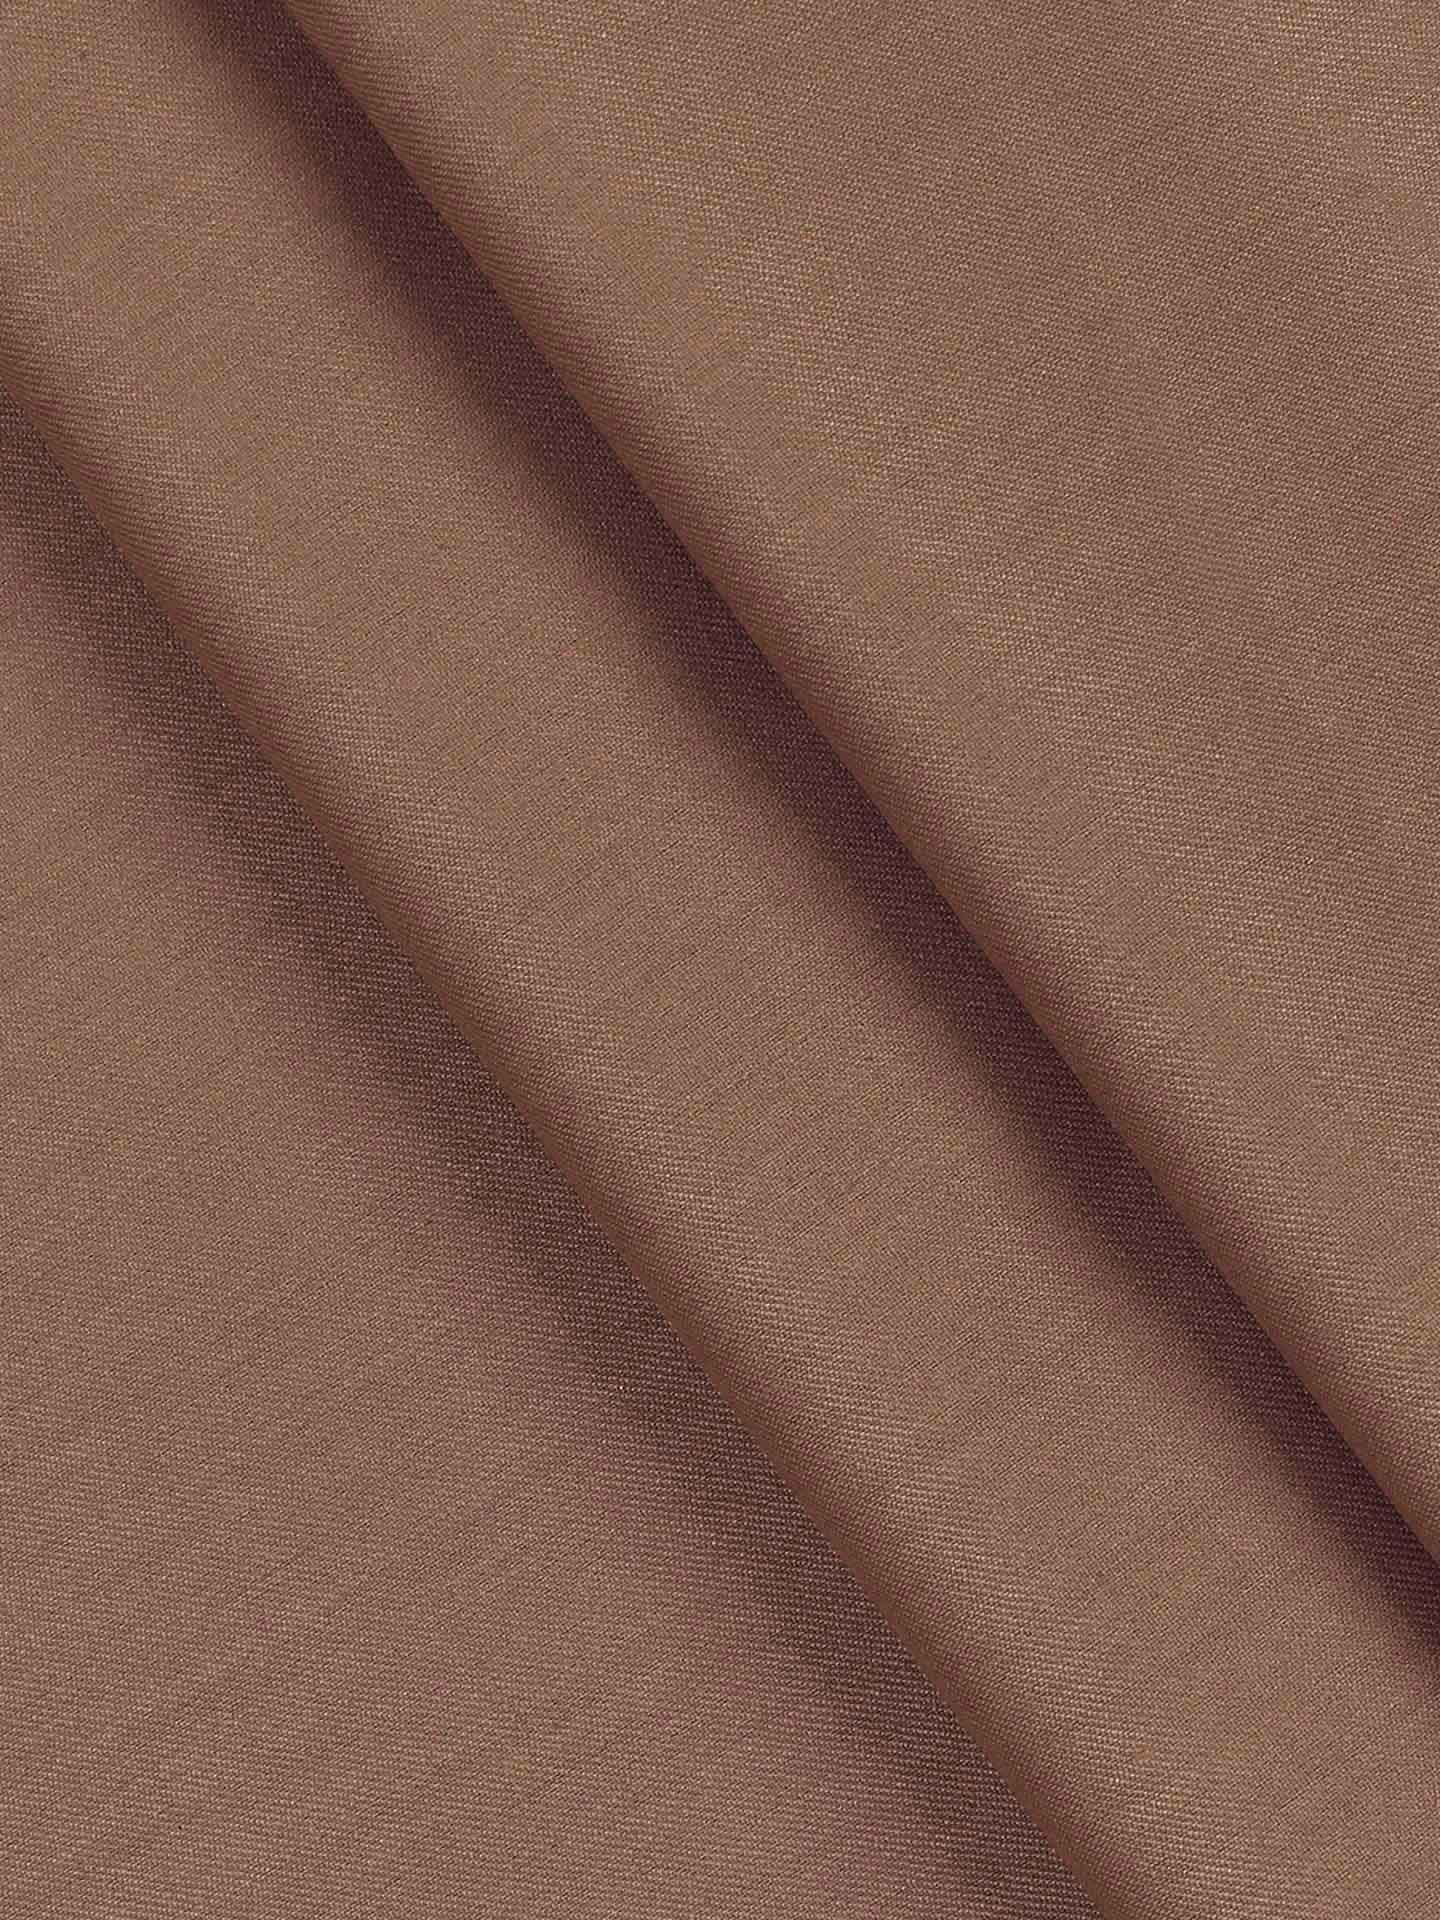 Premium Australian Merino Wool Blended Colour Plain Pants Fabric Light Brown Mark Wool-Pattern view